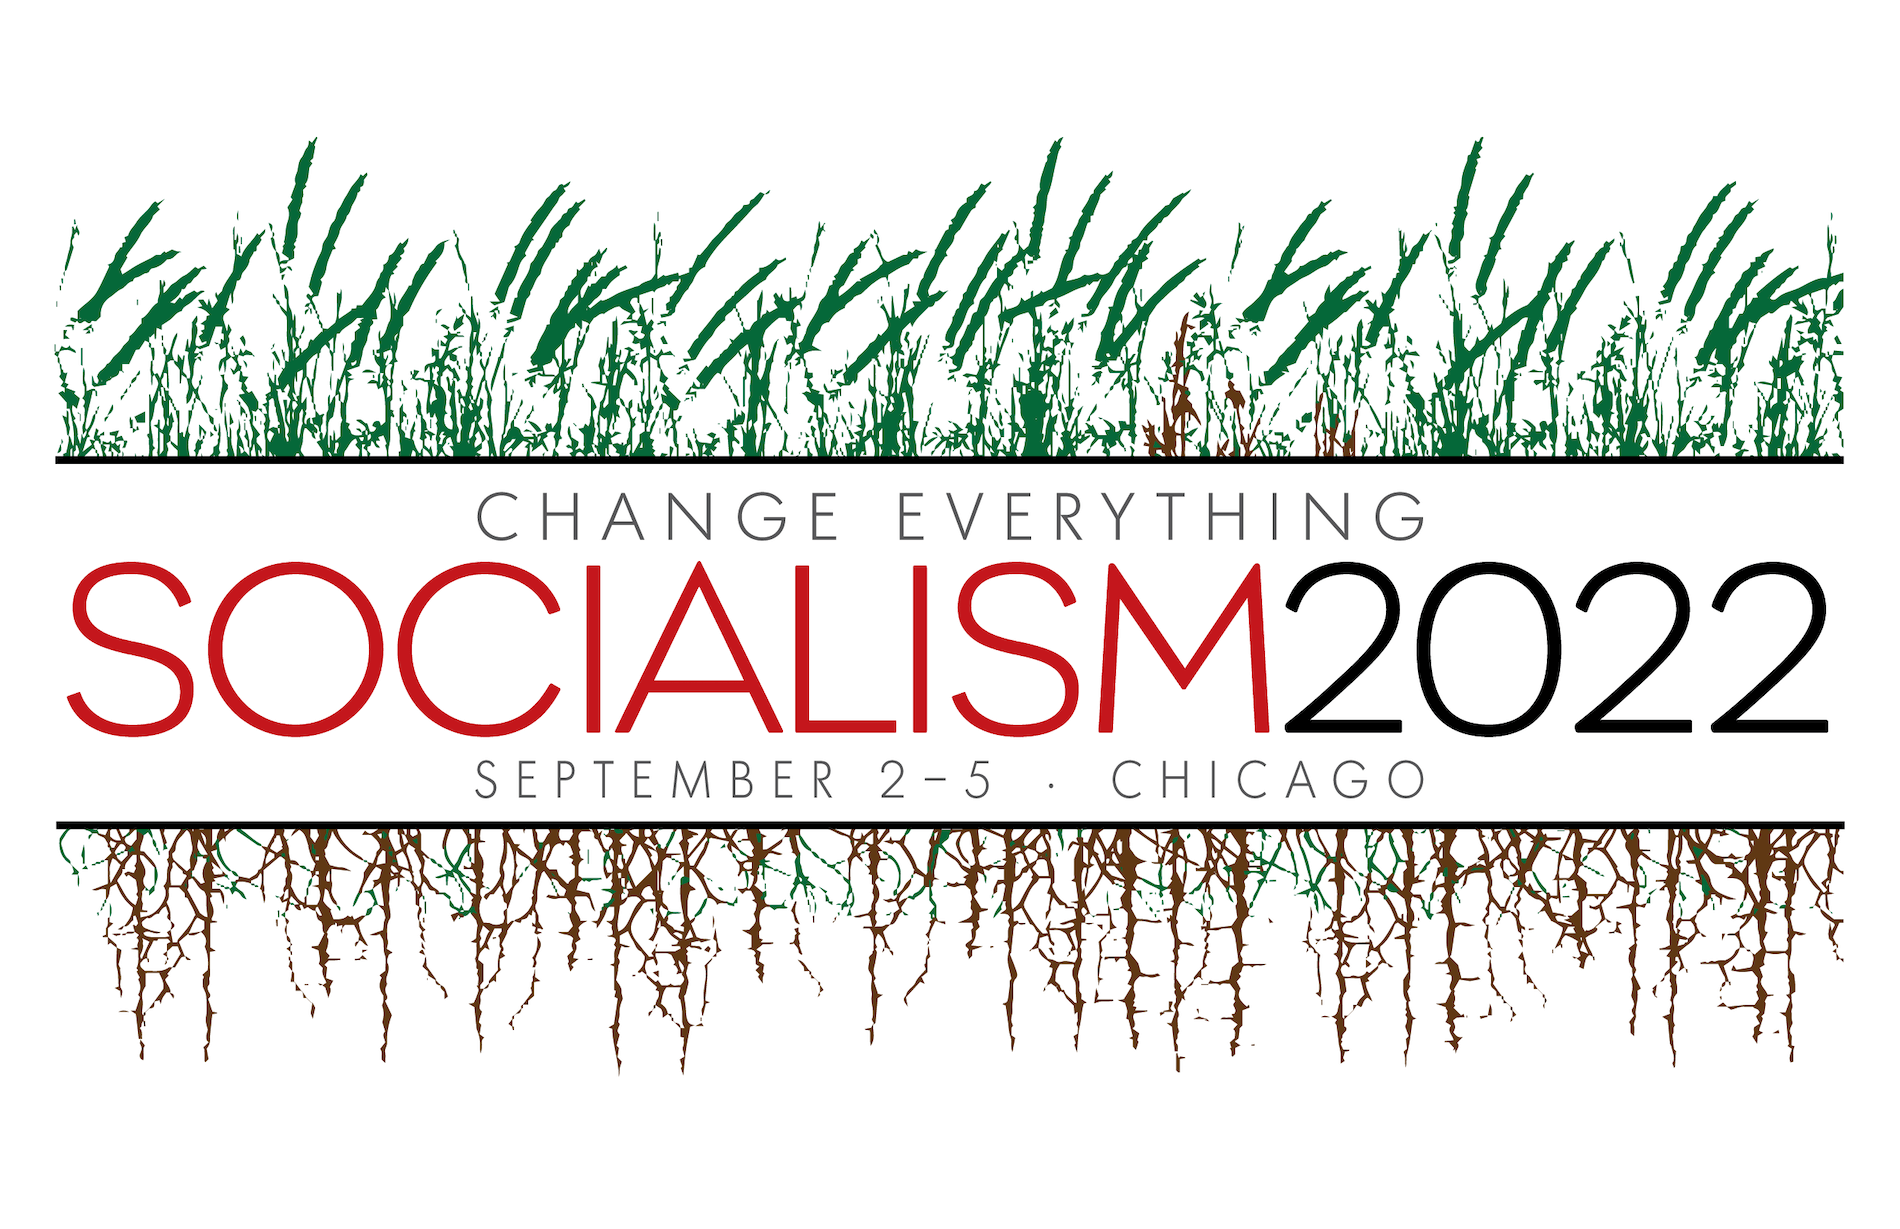 Socialism 2022: Change Everything